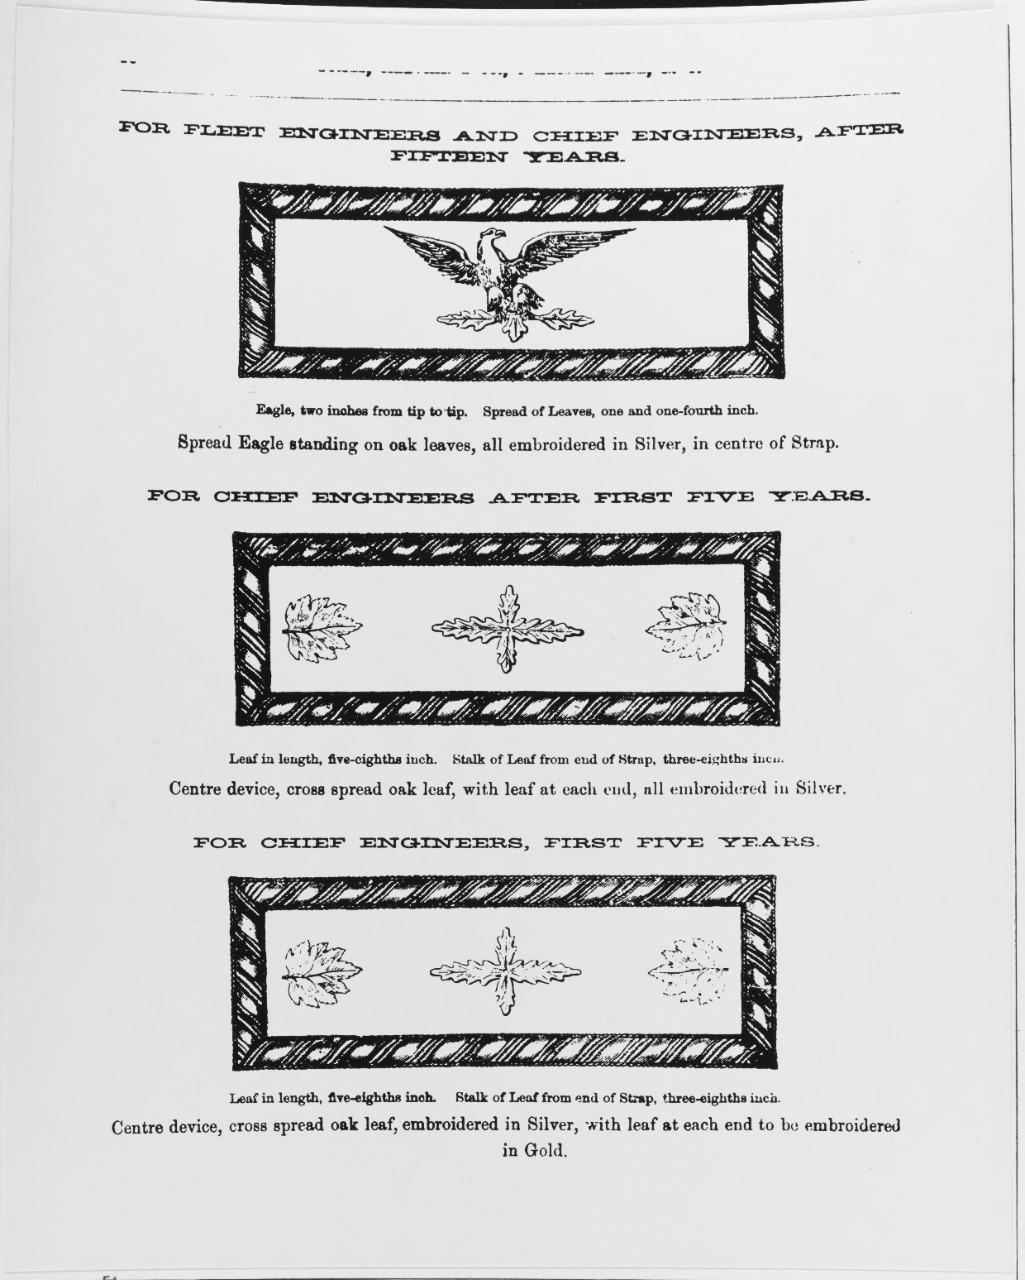 Uniform Regulations, 1864. Shoulder Insignia for Fleet Engineers and Chief Engineers